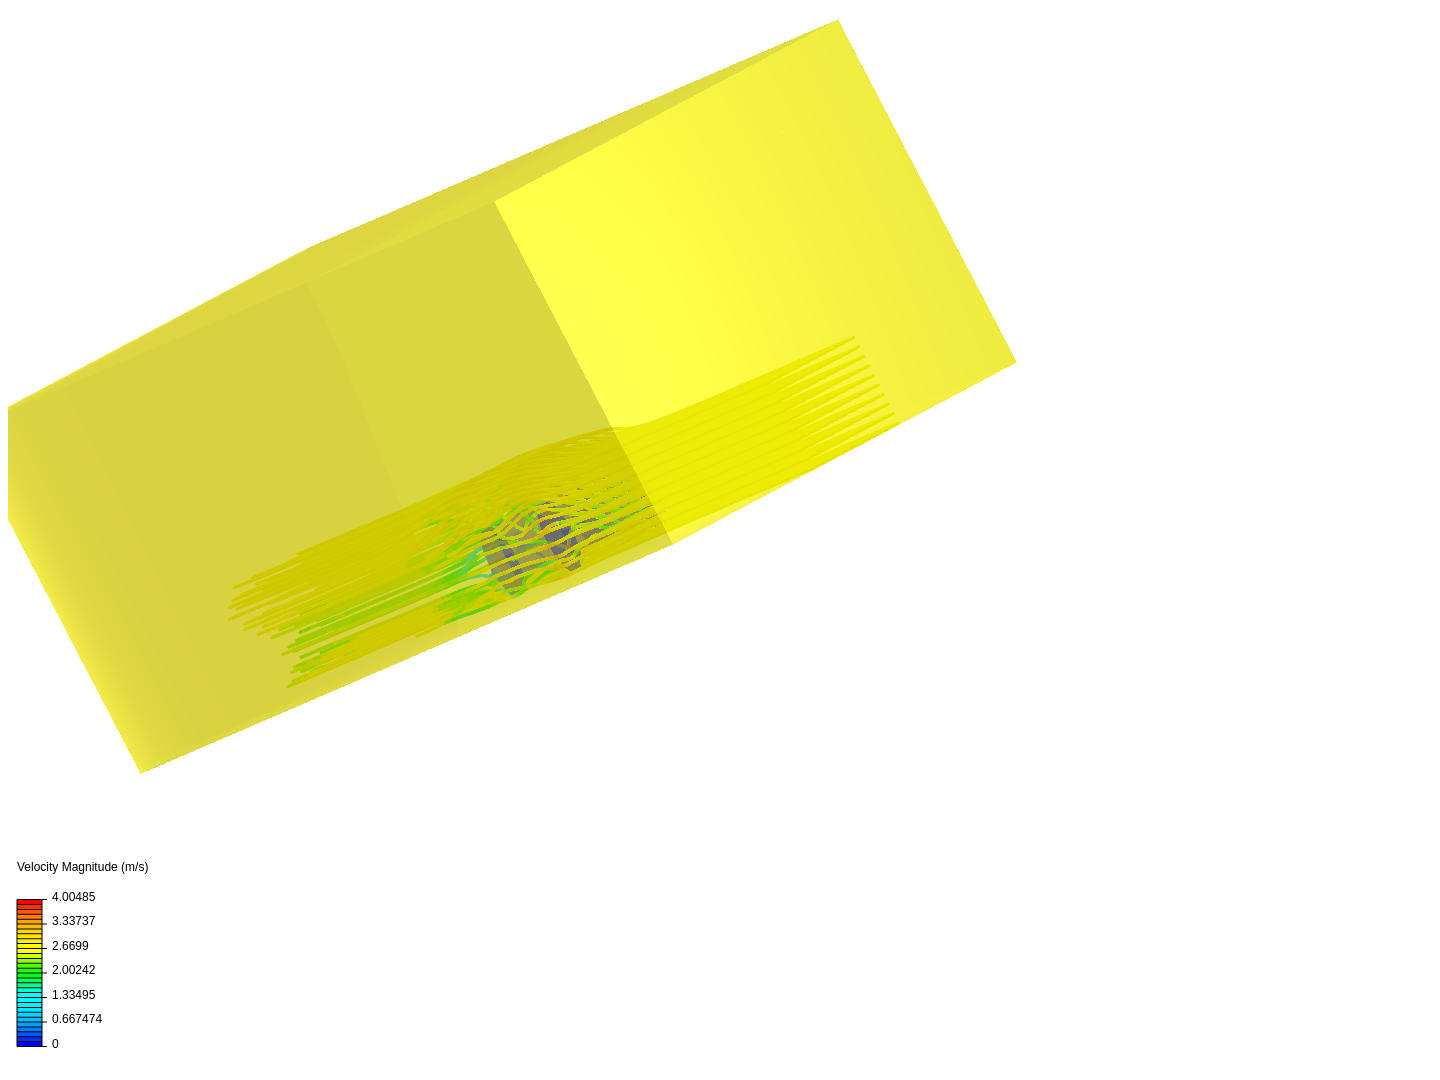 model 2 (10 kmph) image